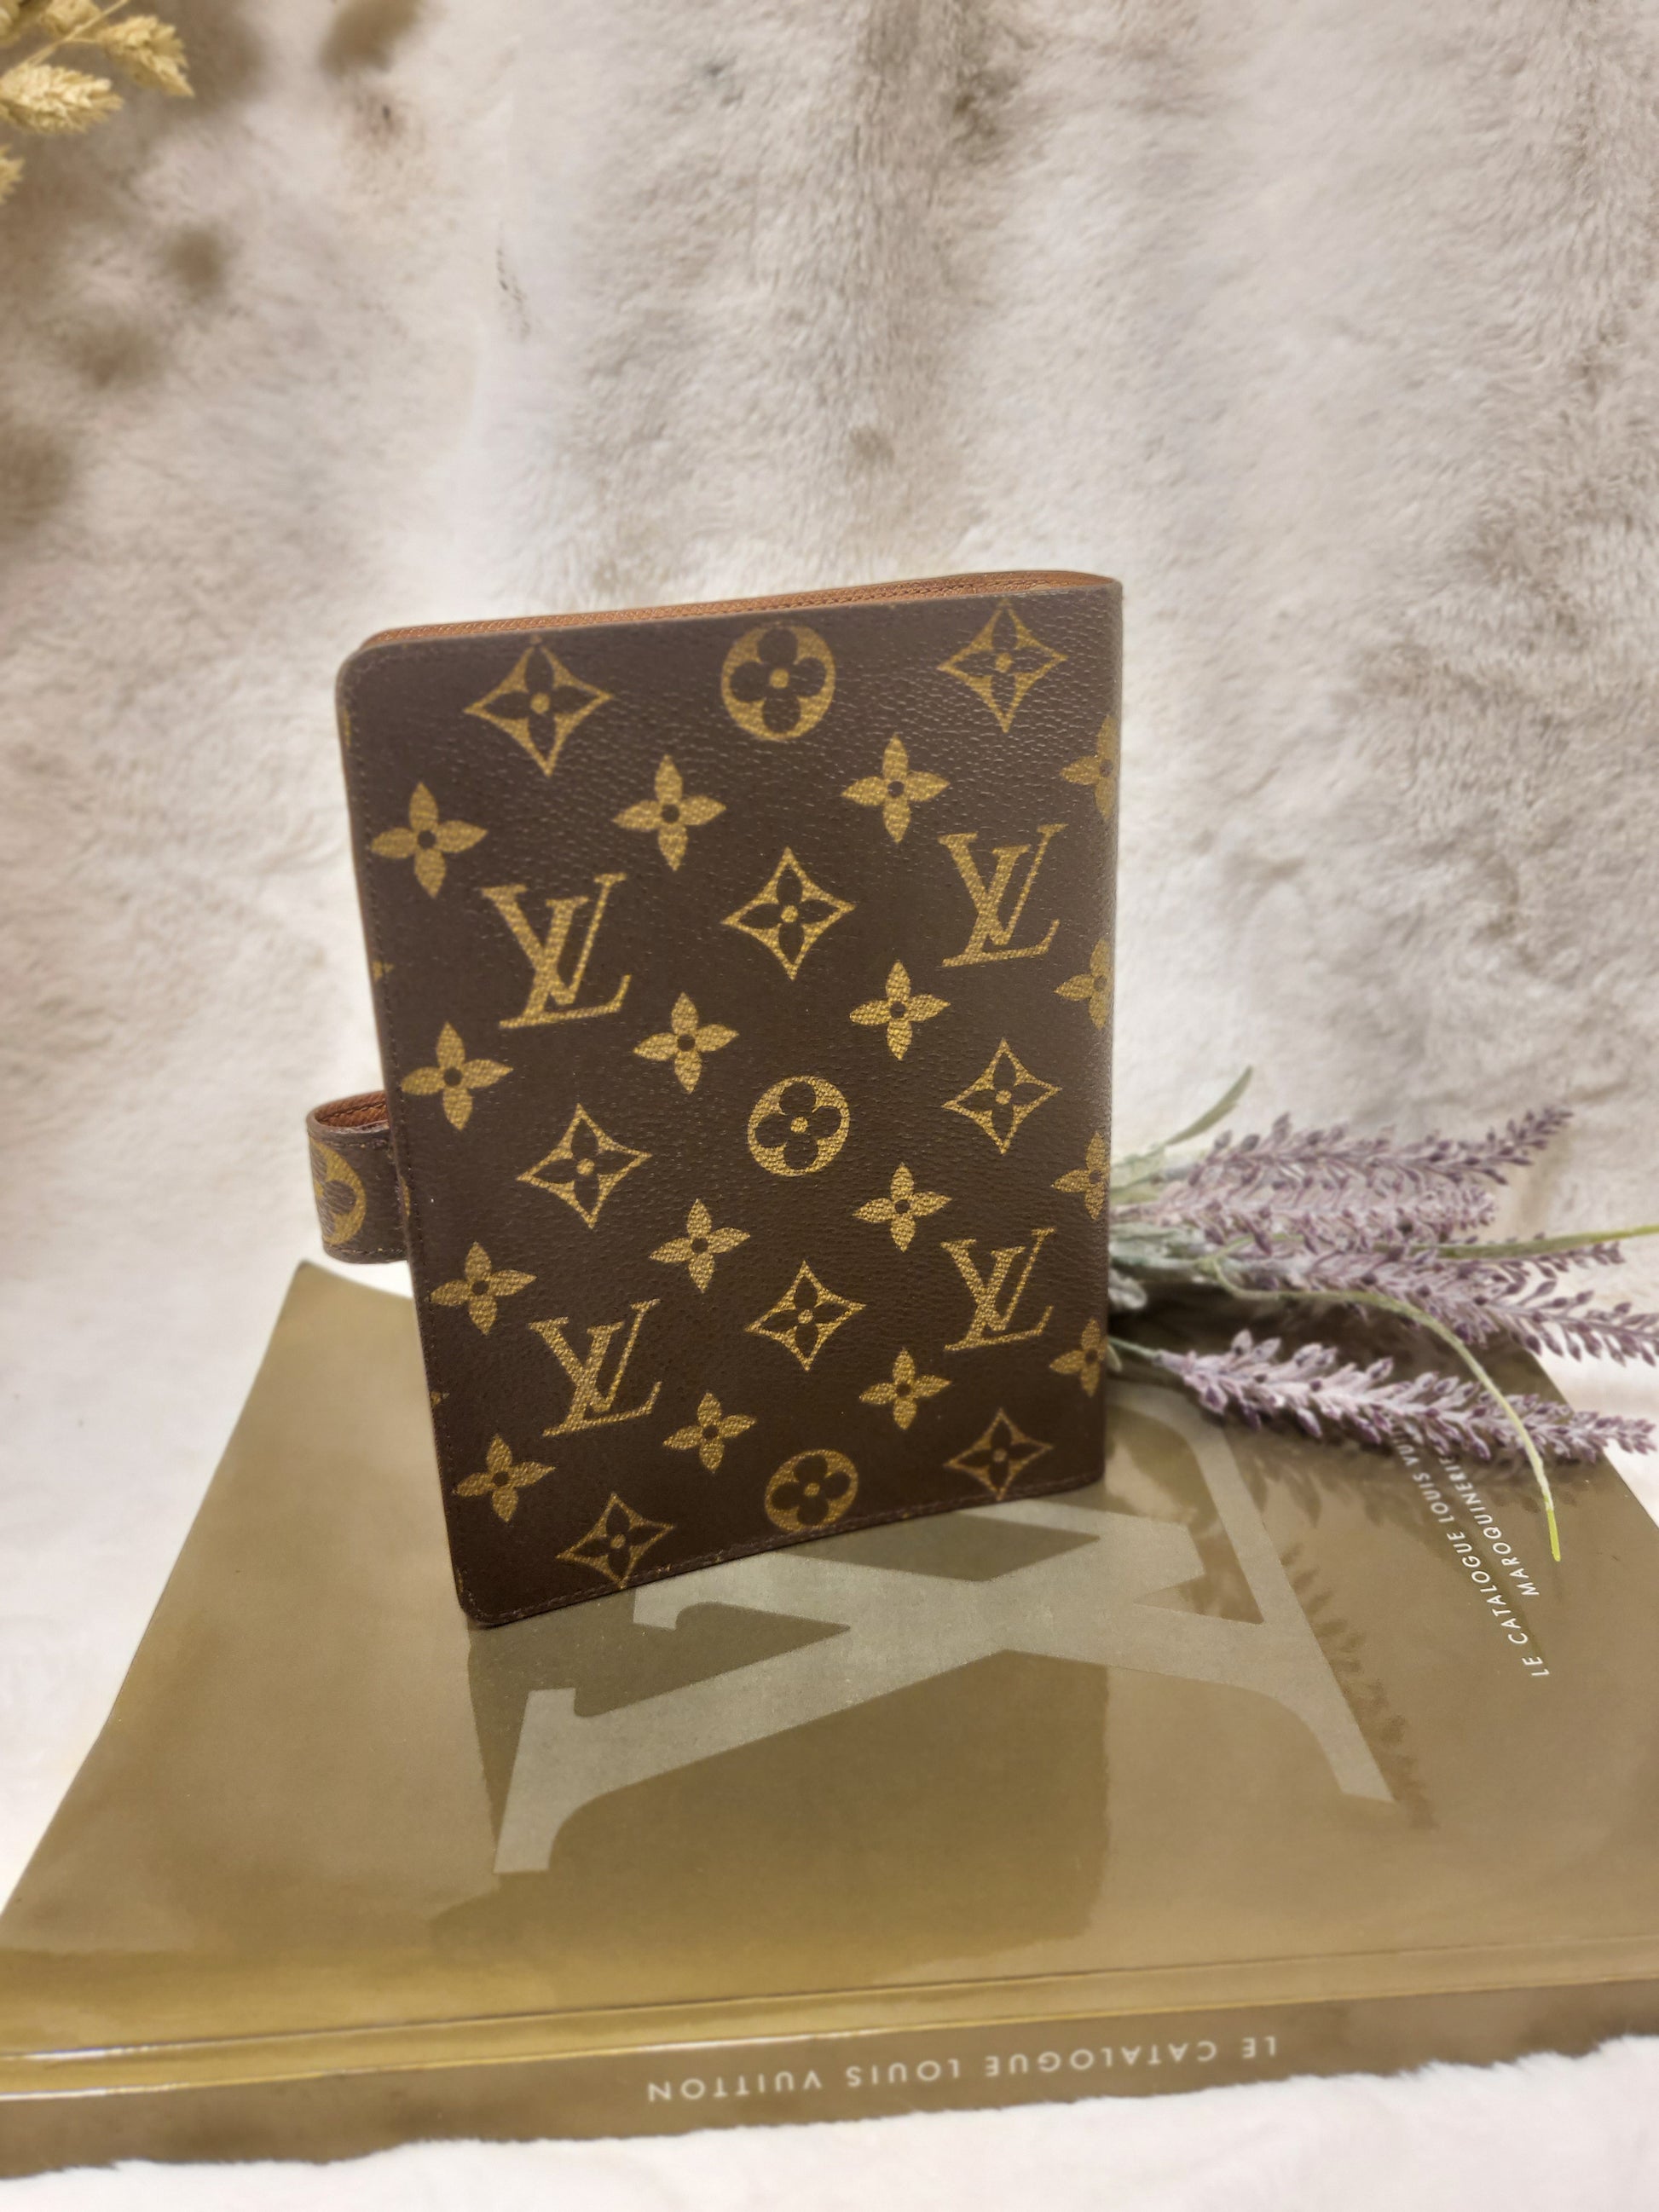 Louis Vuitton Agenda mm Brown Canvas Wallet (Pre-Owned)